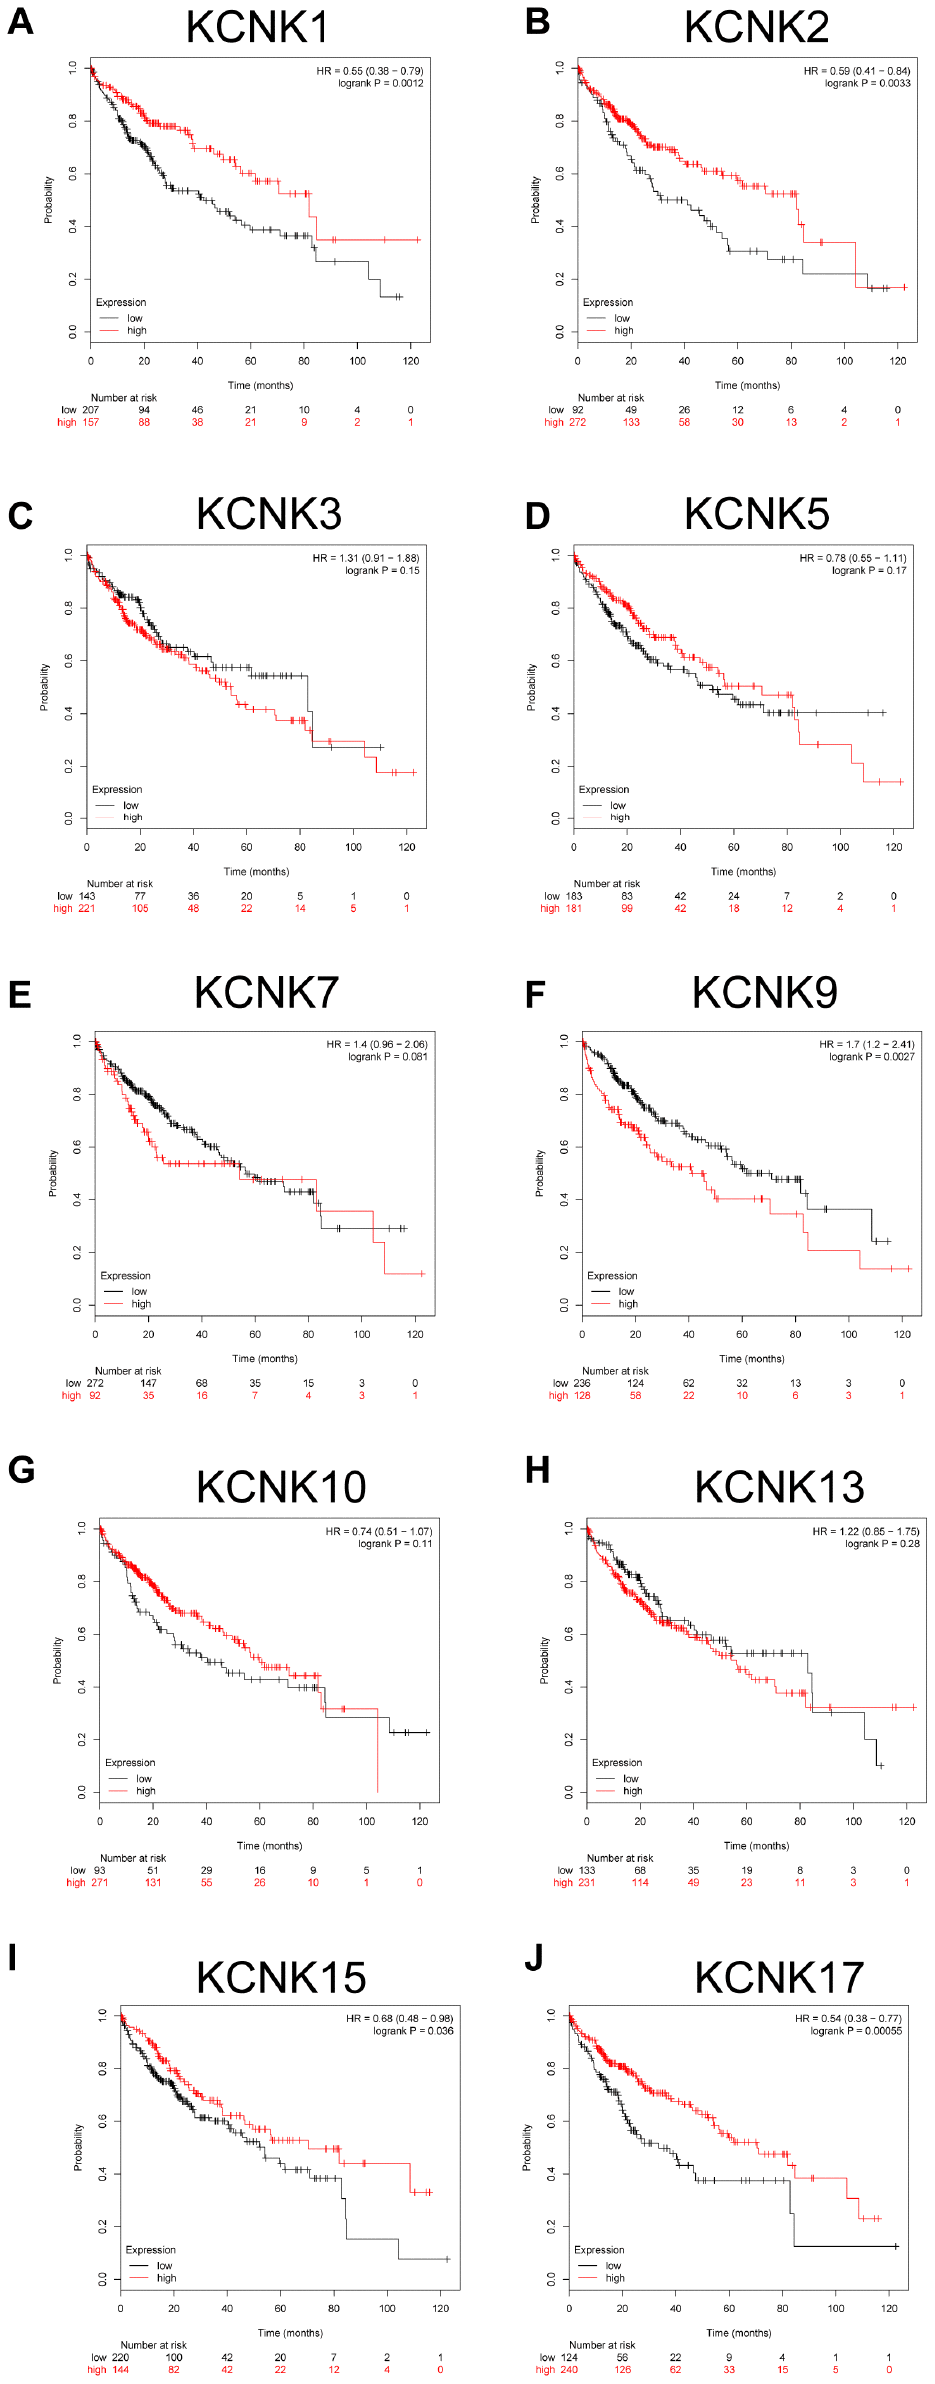 Prognostic value of mRNA expression for distinct KCNKs in HCC (Kaplan-Meier Plotter). KCNK9 mRNA levels correlated negatively (F) while KCNK1/2/15/17 mRNA levels correlated positively (B, I, J) with OS of HCC patients. KCNK7/10/13 mRNA levels showed no correlation with HCC patient prognosis (E, G, H).